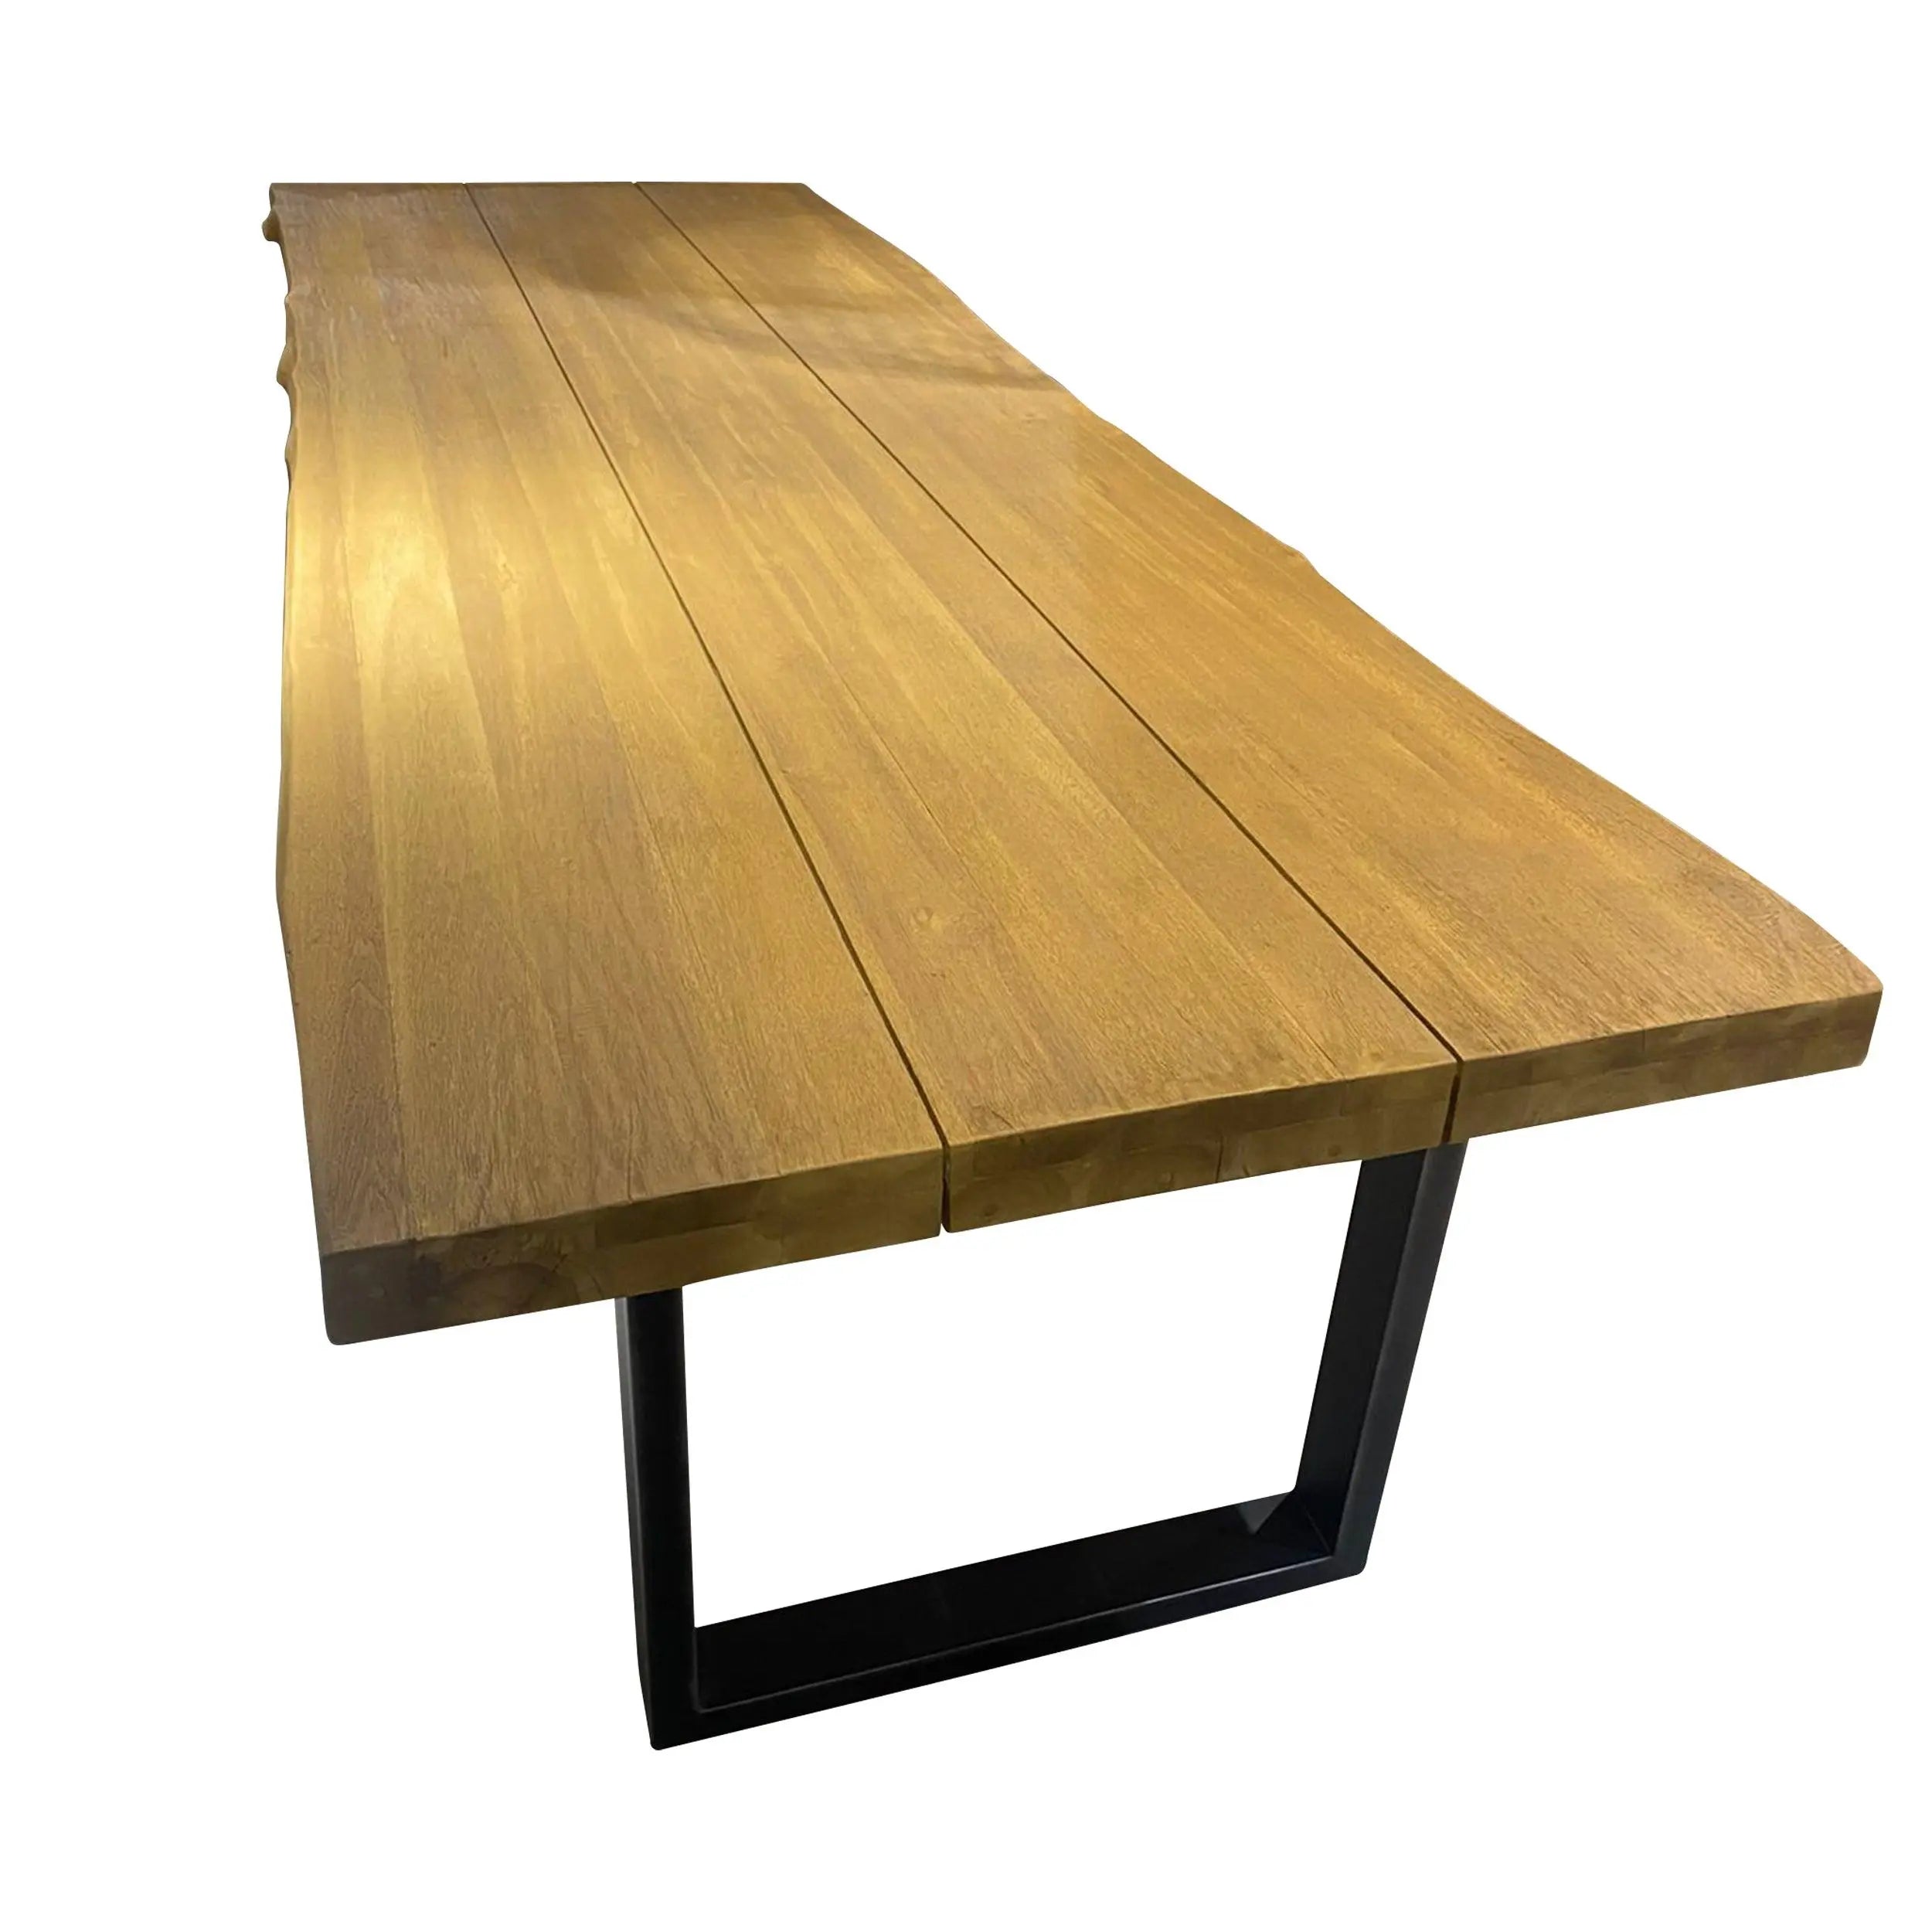 Mesa madera 70x70 antracita y color natural M3840